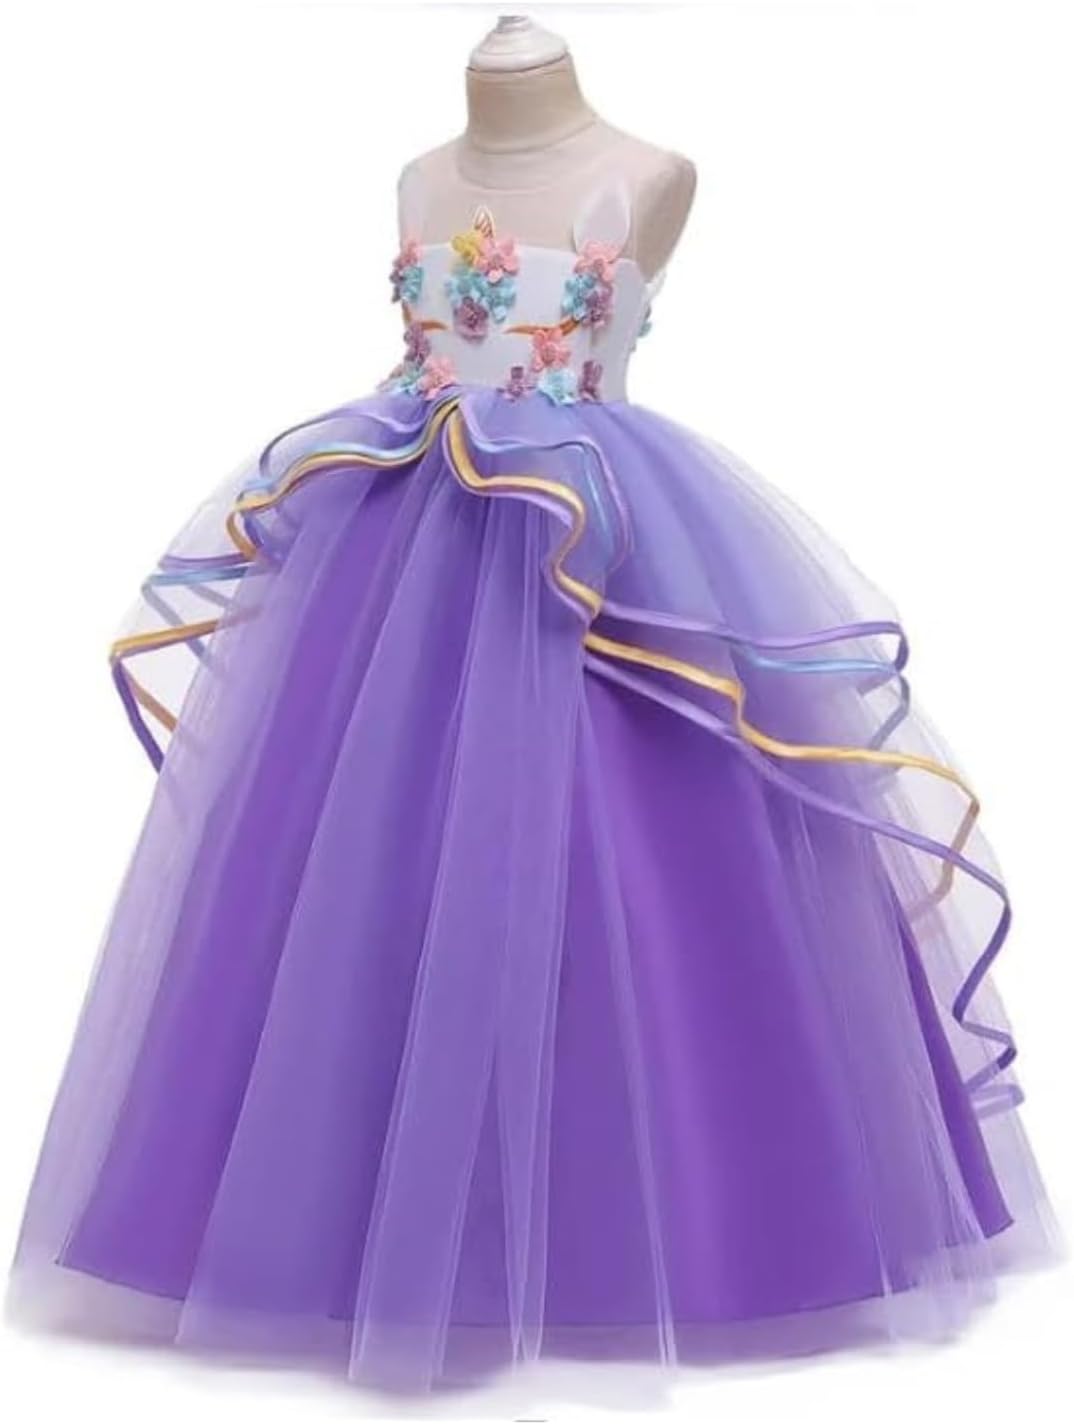 Princess and Costume Dress for Girls with Unicorn Headband